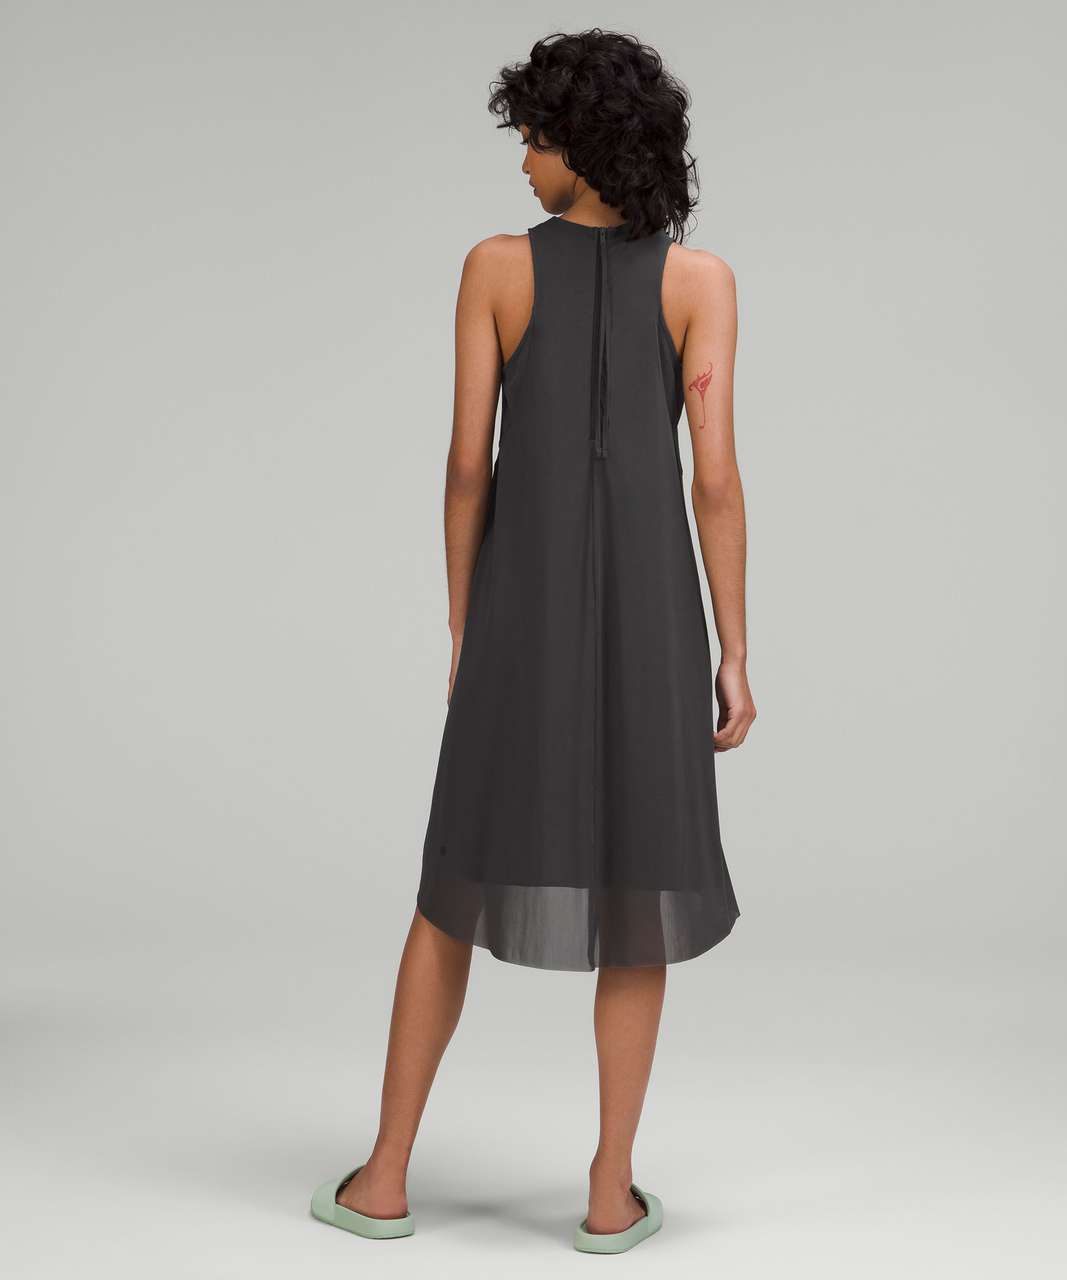 Lululemon Mesh Overlay High-Neck Dress - Graphite Grey